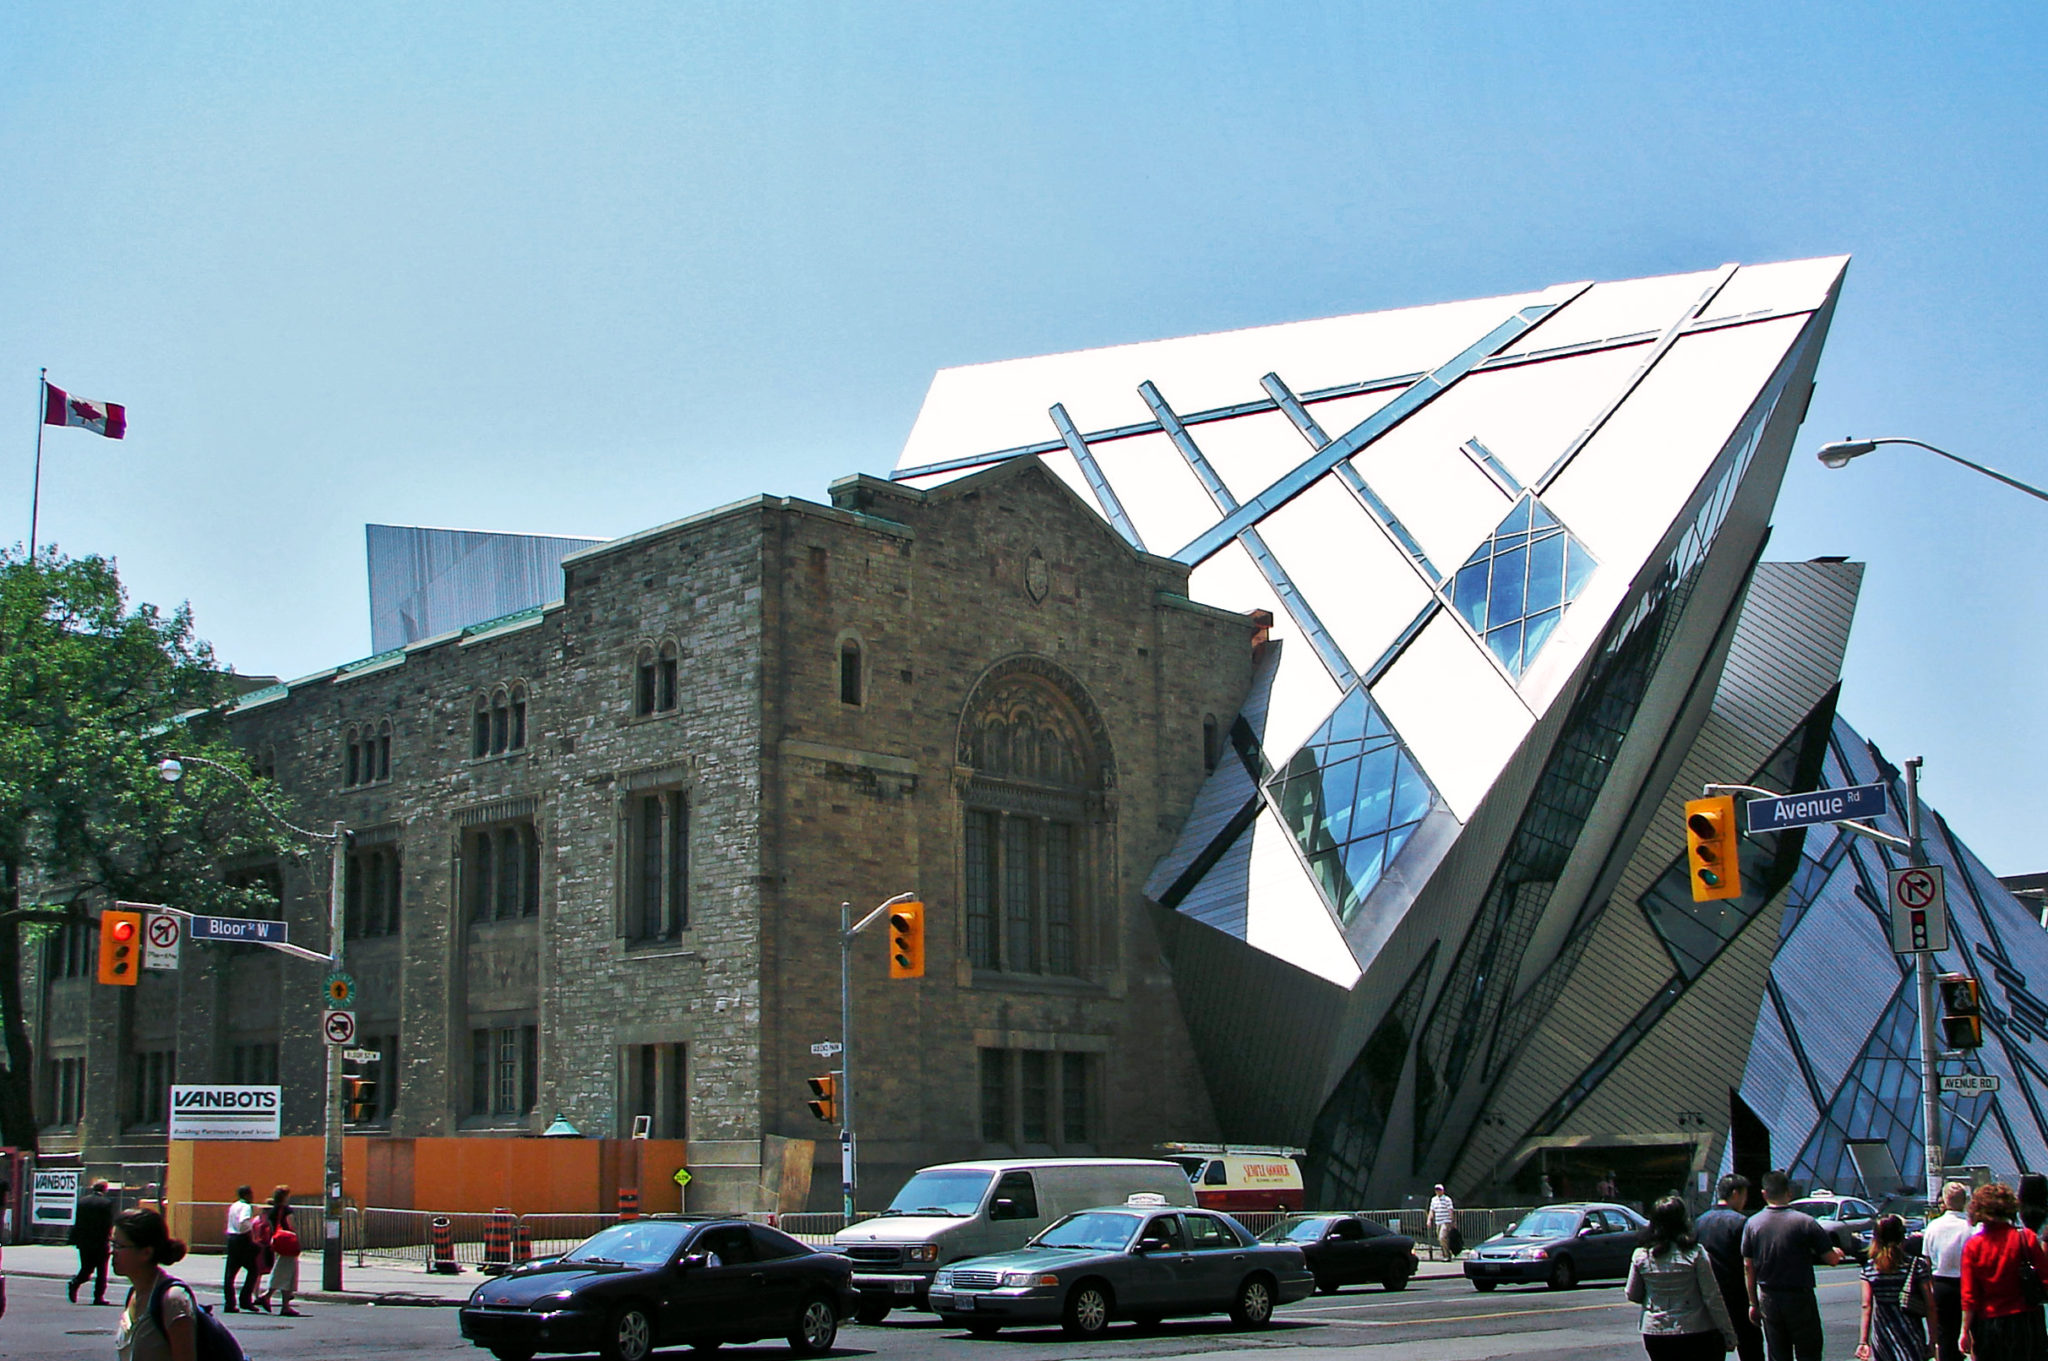 Outside shot of Royal Ontario Museum during daytime